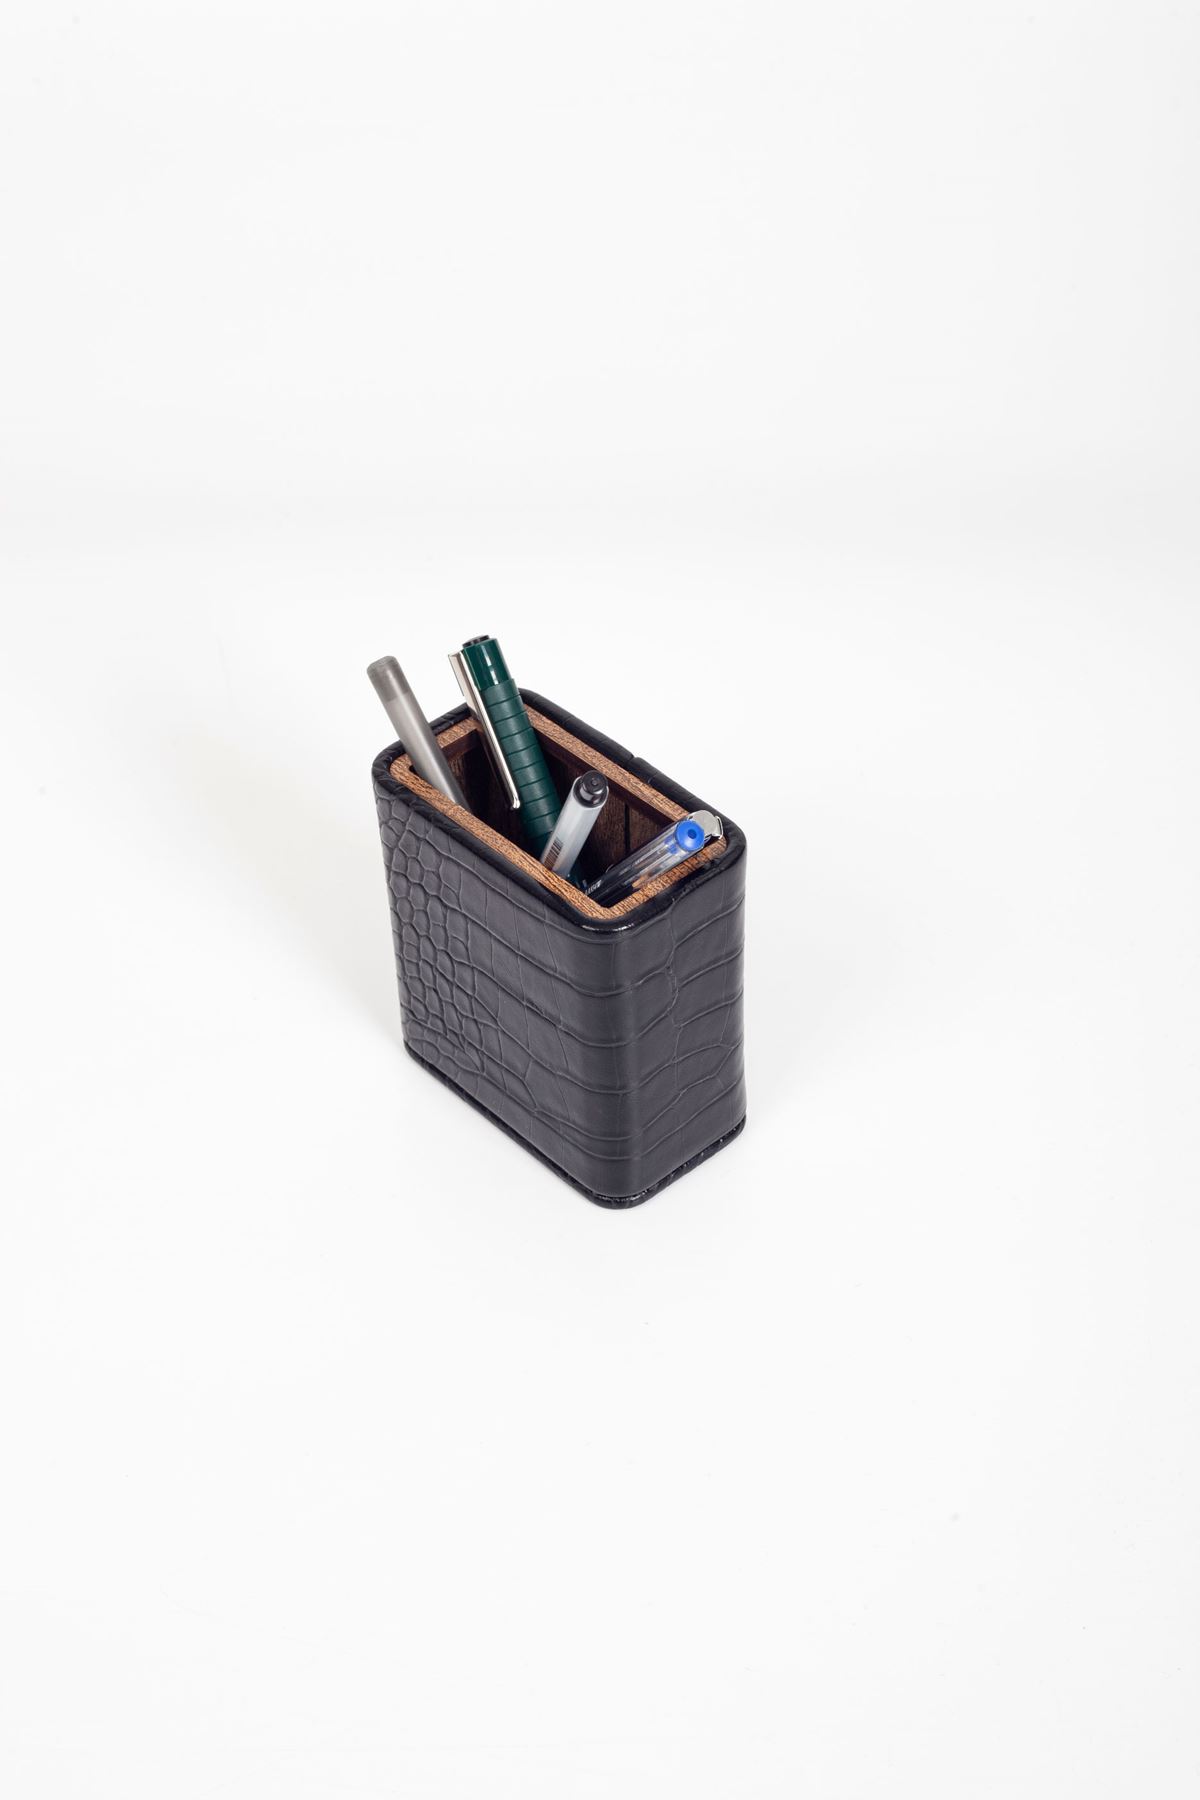 Desktop Croco Leather Pattern and Wooden Detailed Pen Holder